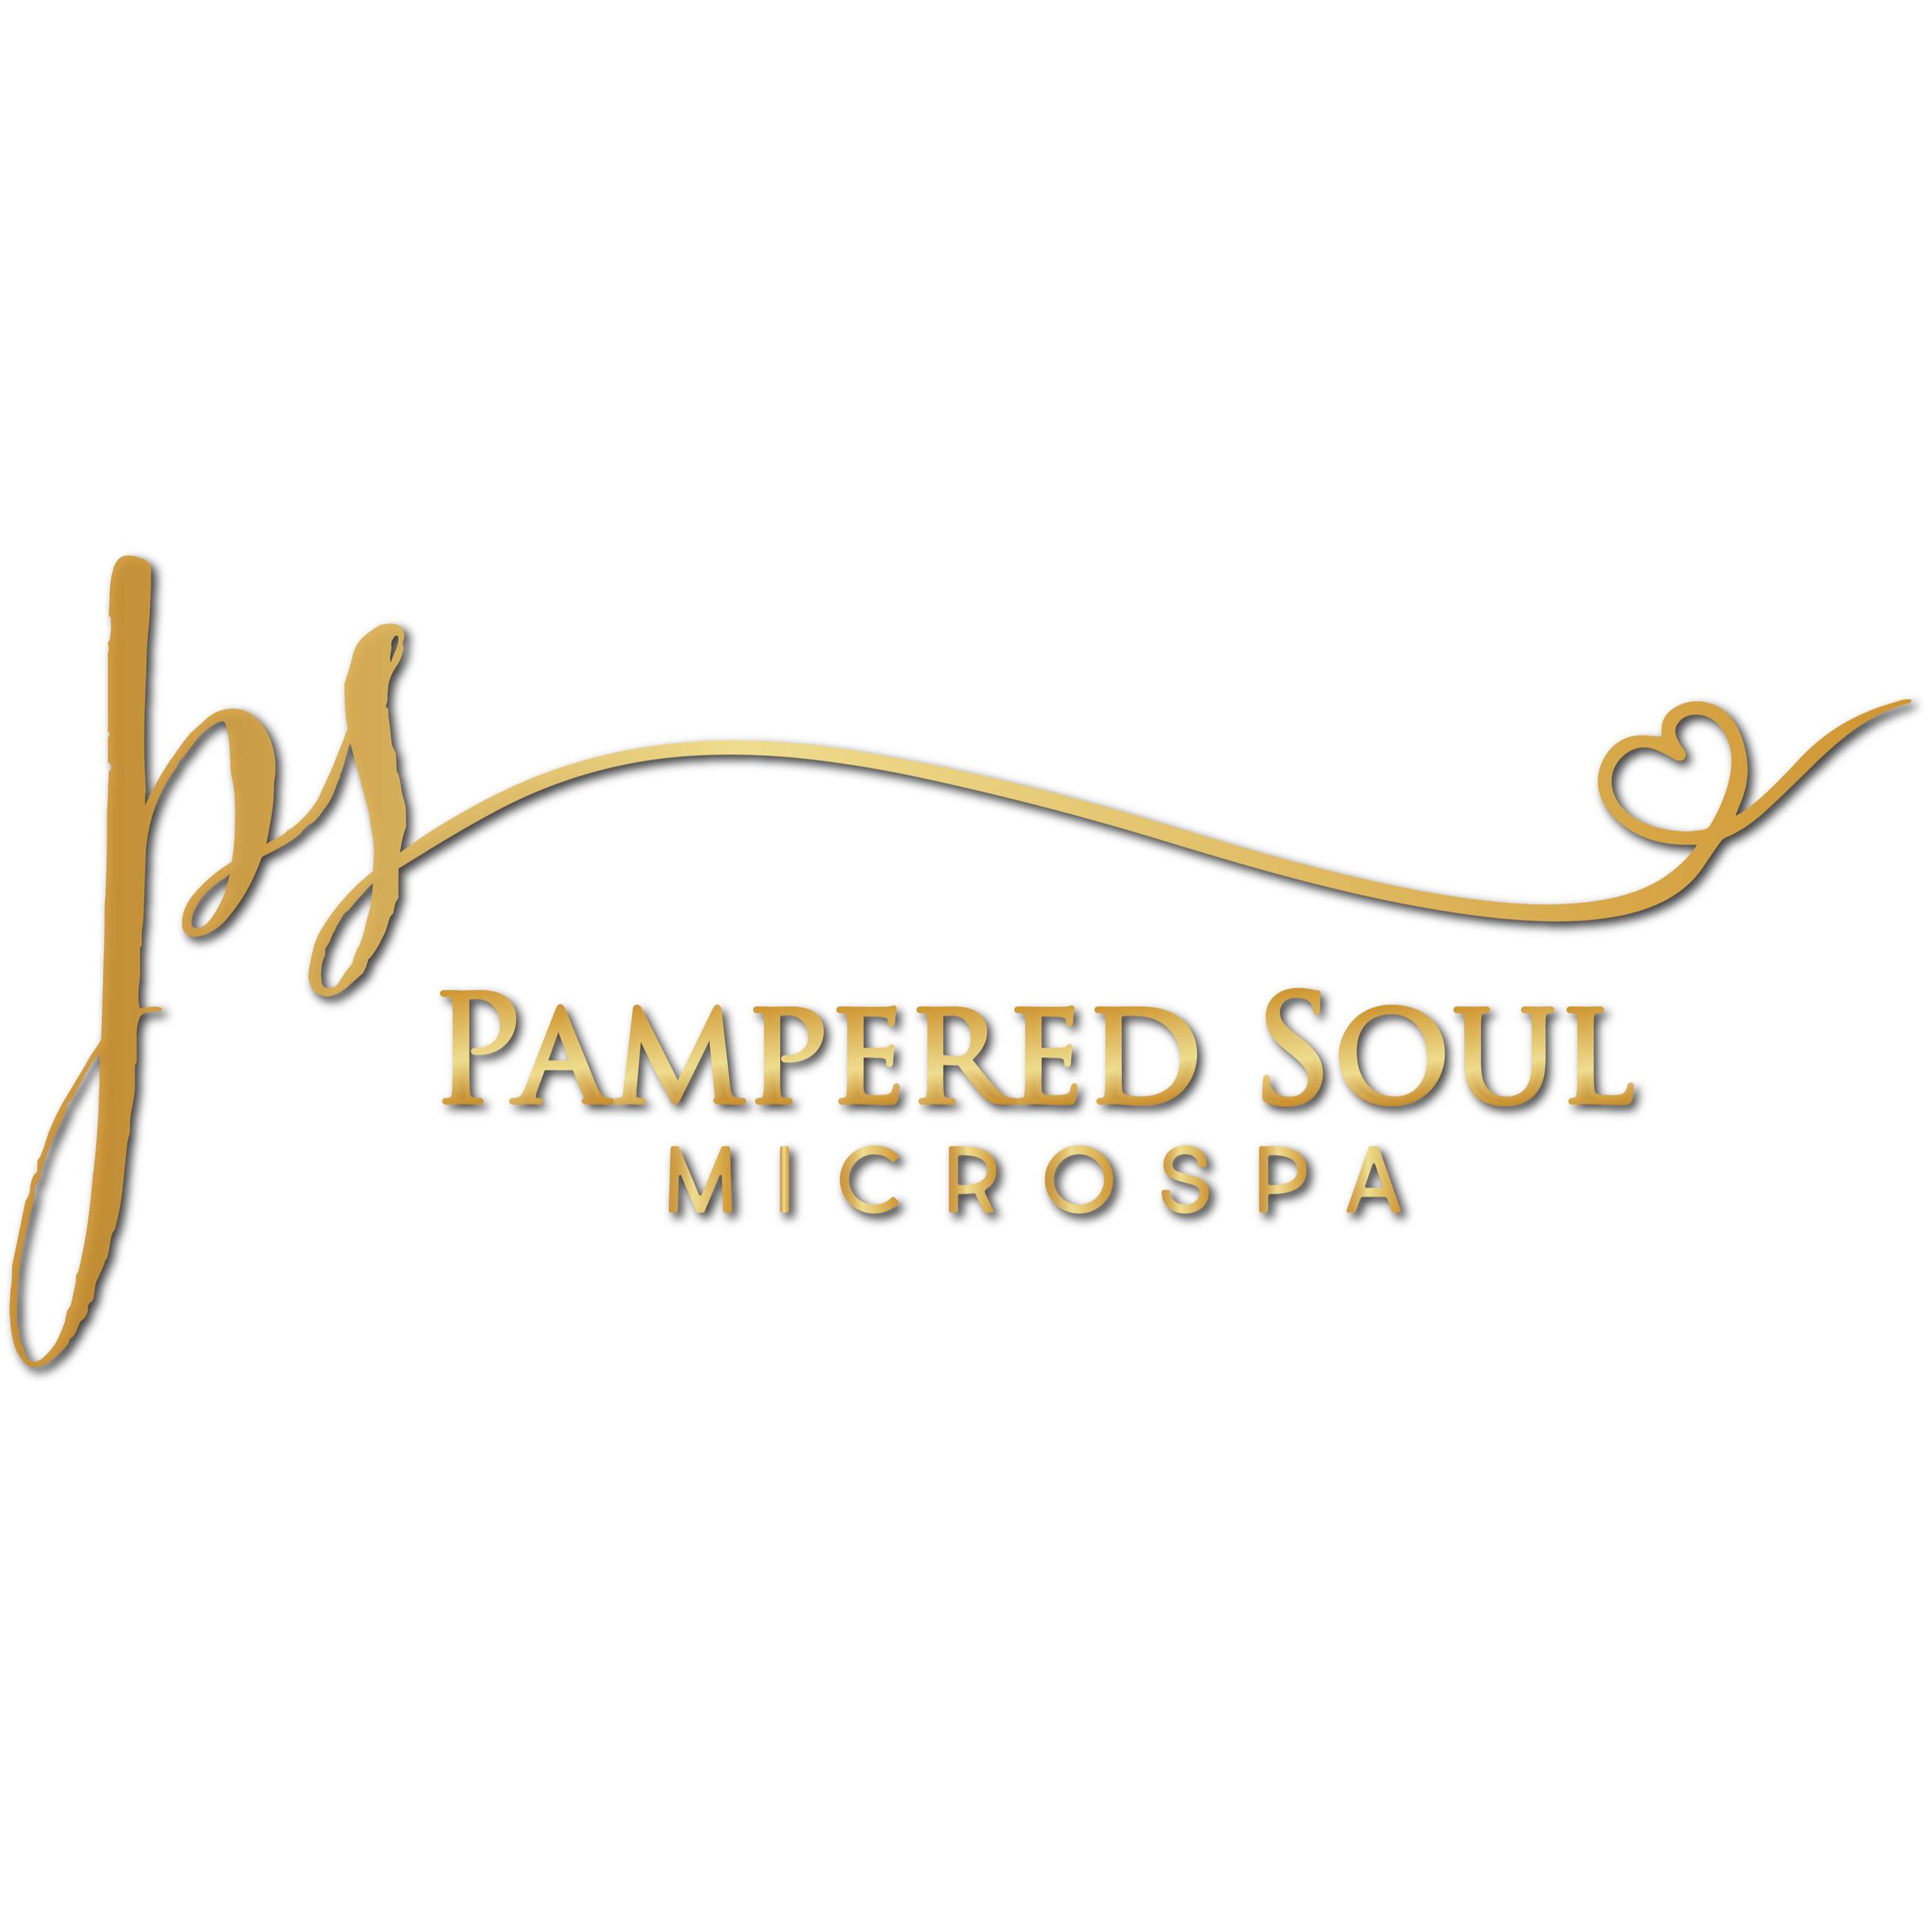 Pampered Soul Microspa - Northville, MI 48167 - (248)794-2372 | ShowMeLocal.com